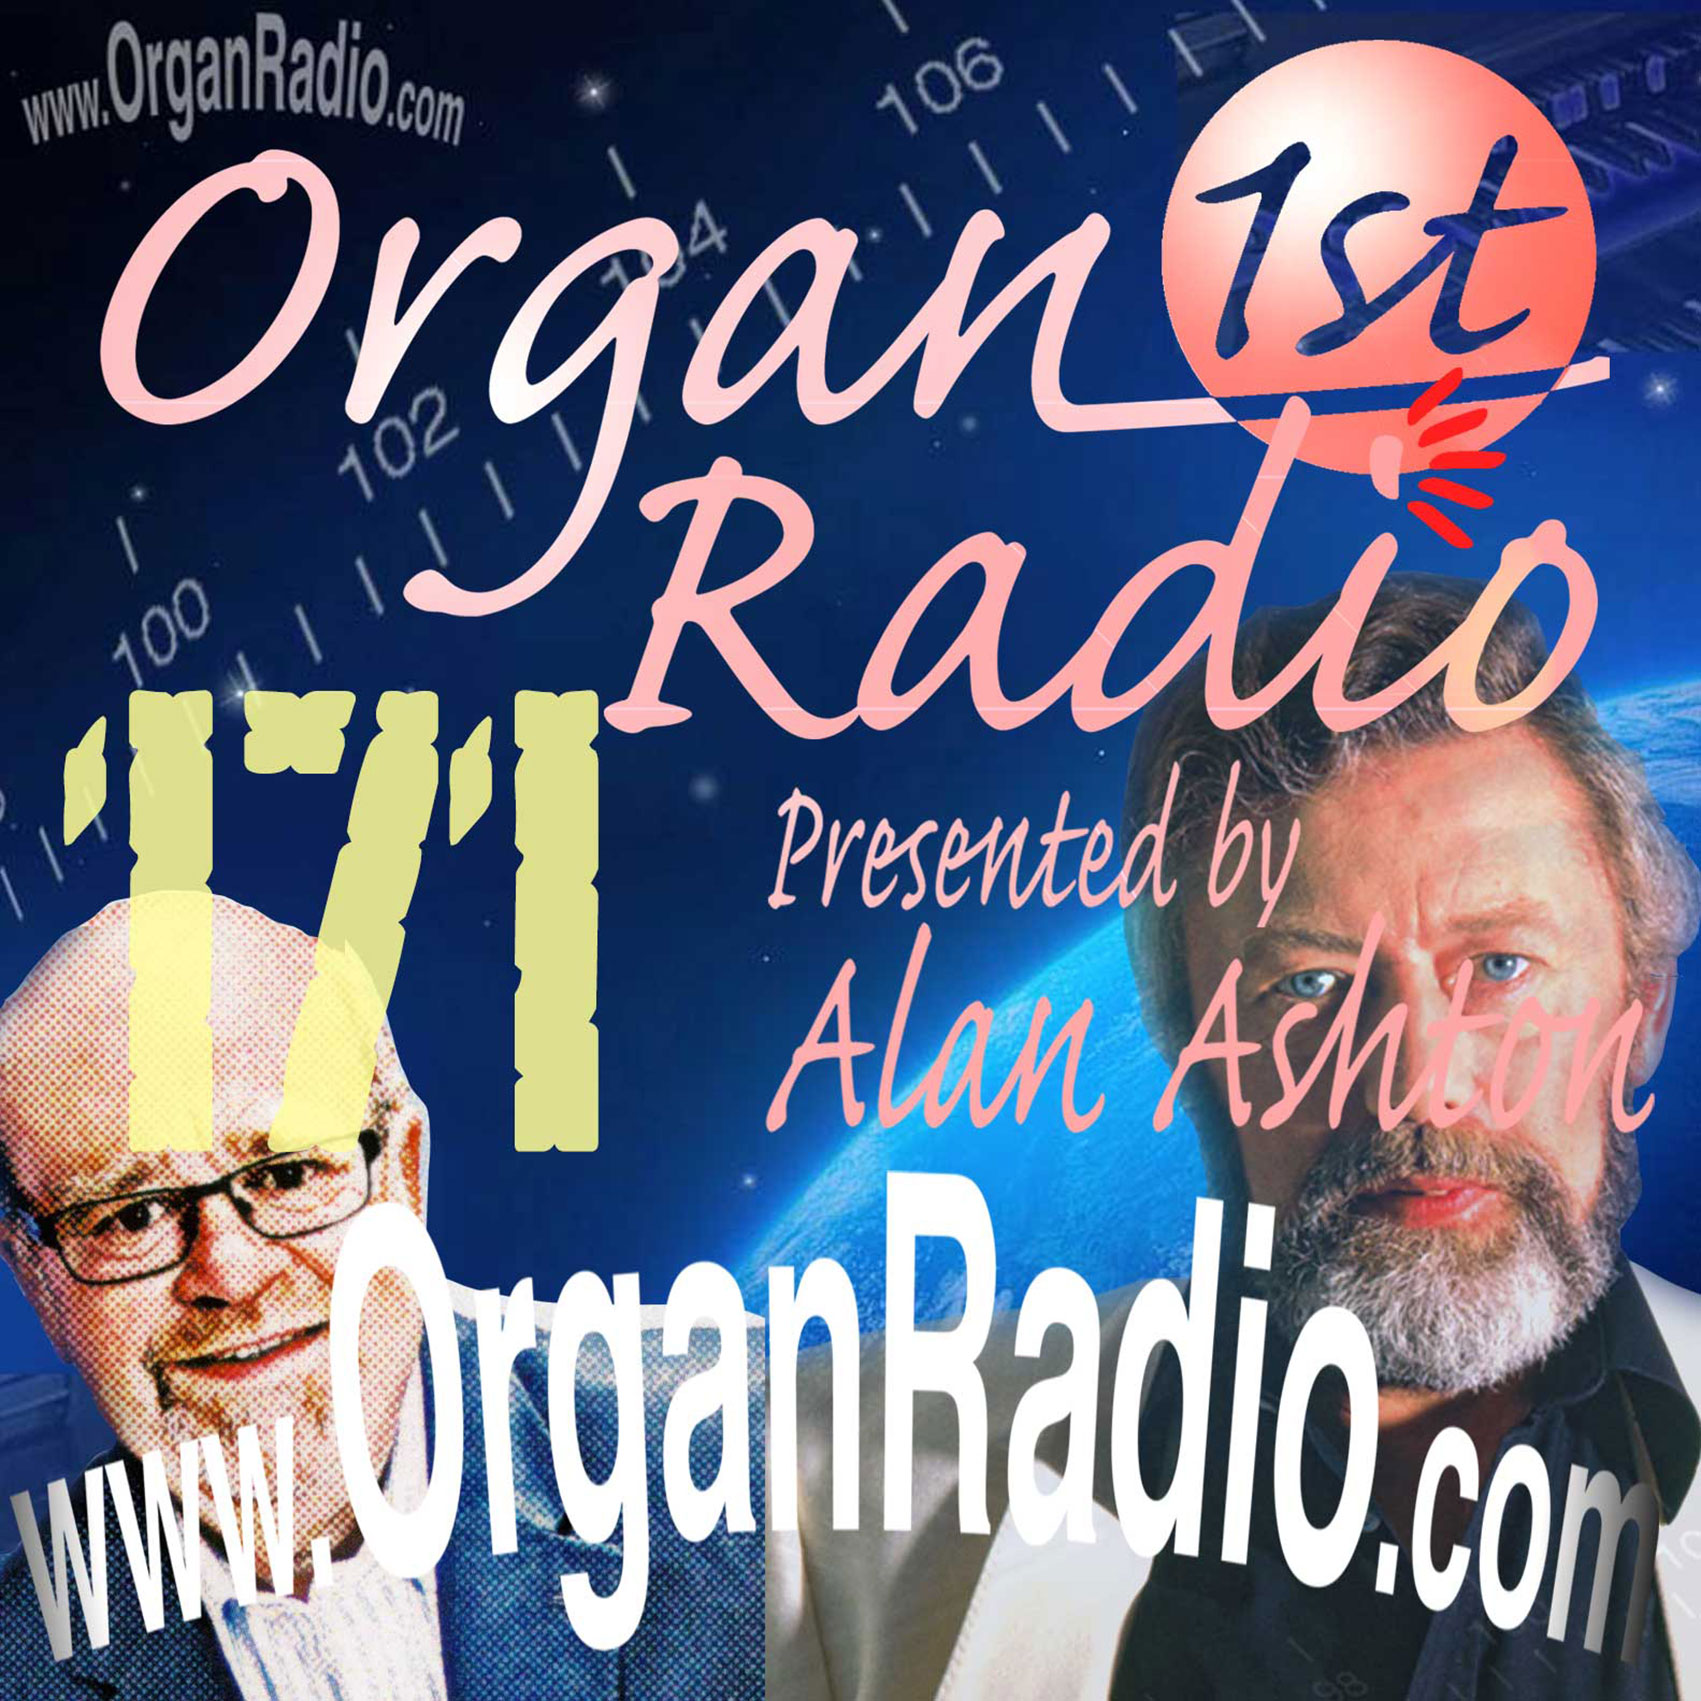 ORGAN1st - Organ Radio Podcast - Show 167